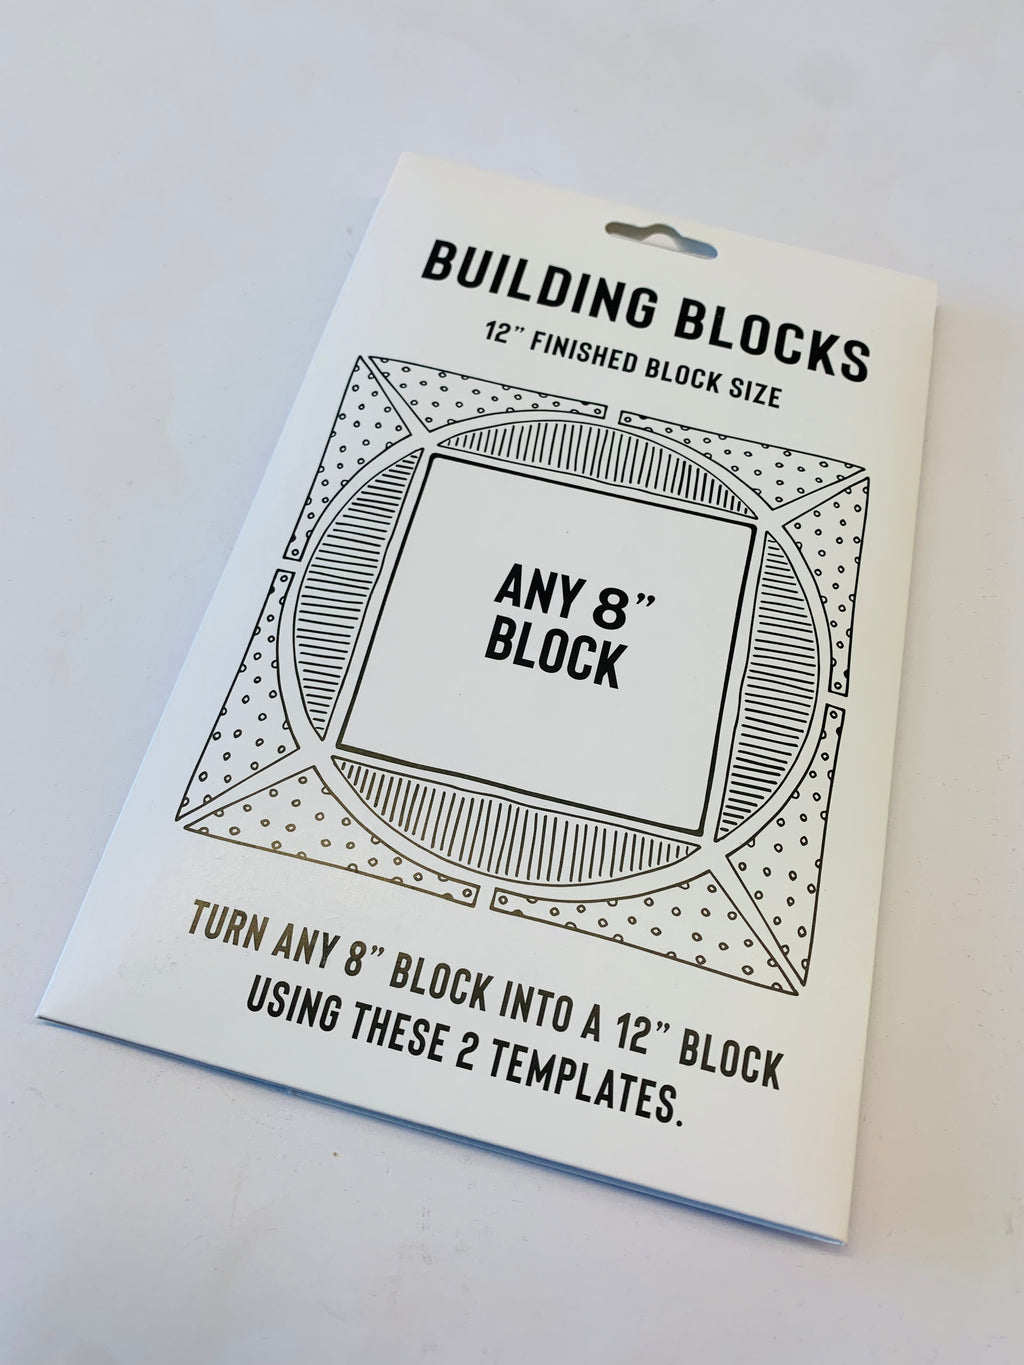 Jen Kingwell/ Building Blocks (12” Finished Block Size)